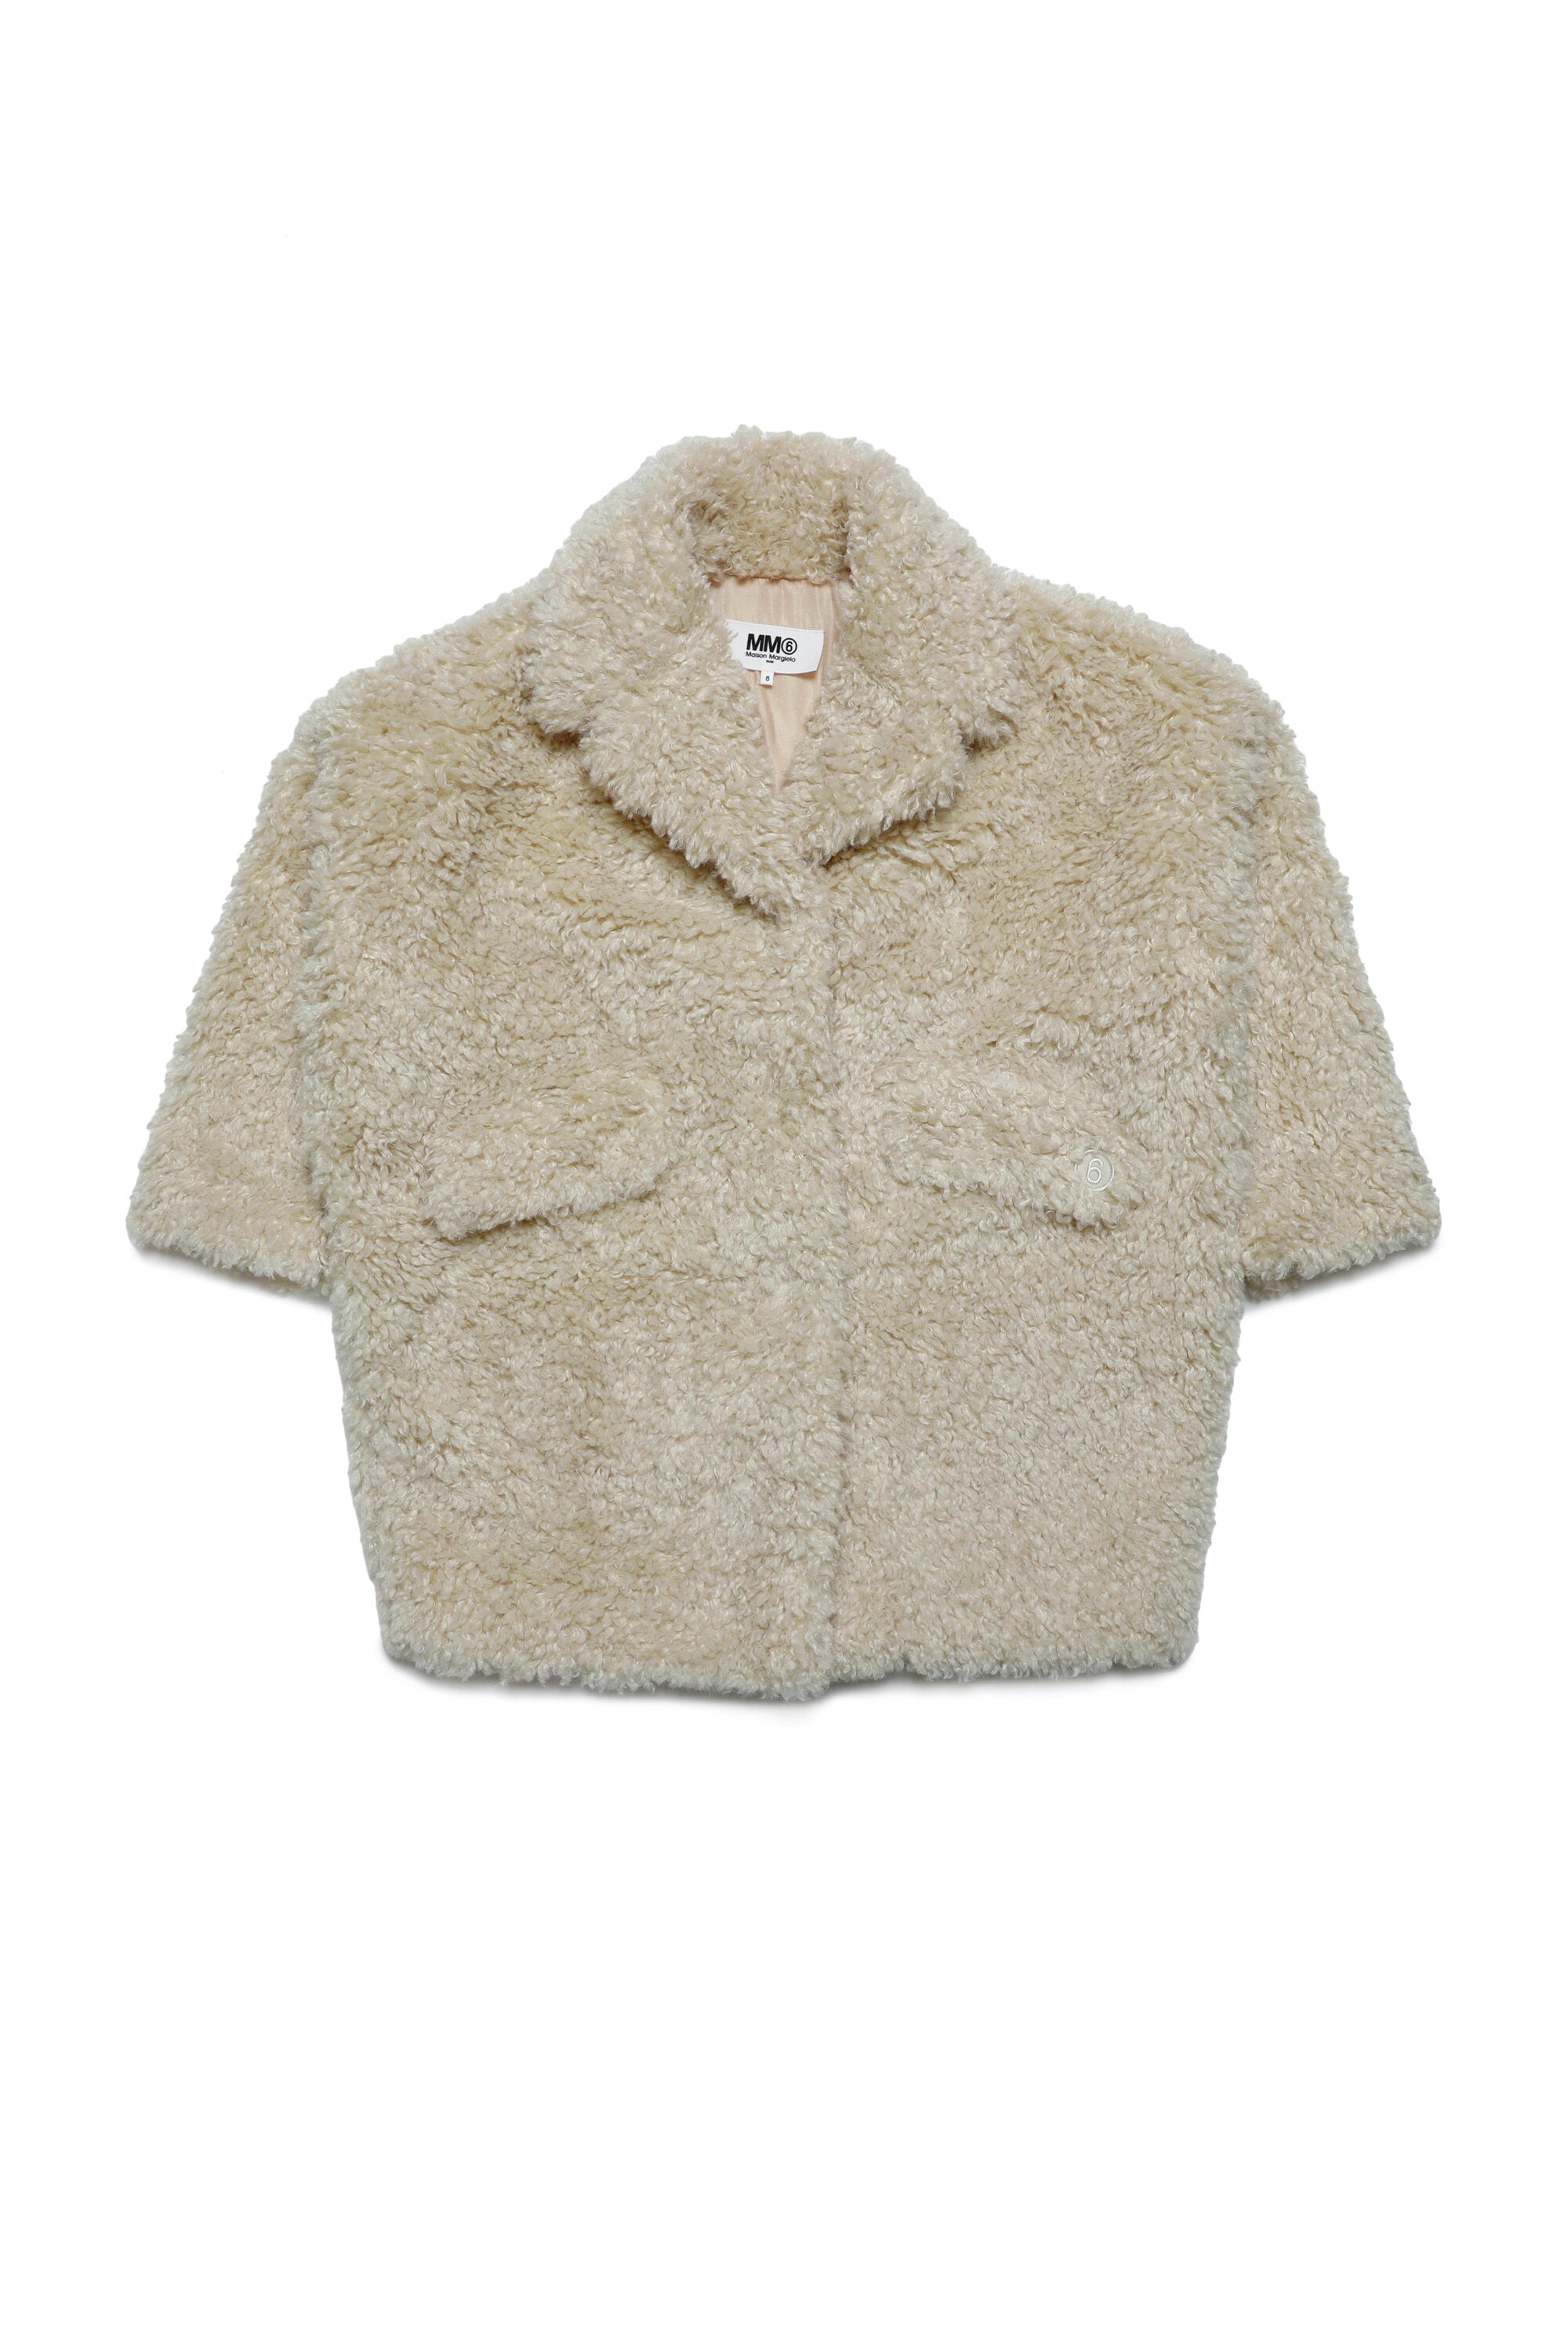 MM6 teen faux fur teddy jacket | BRAVE KID